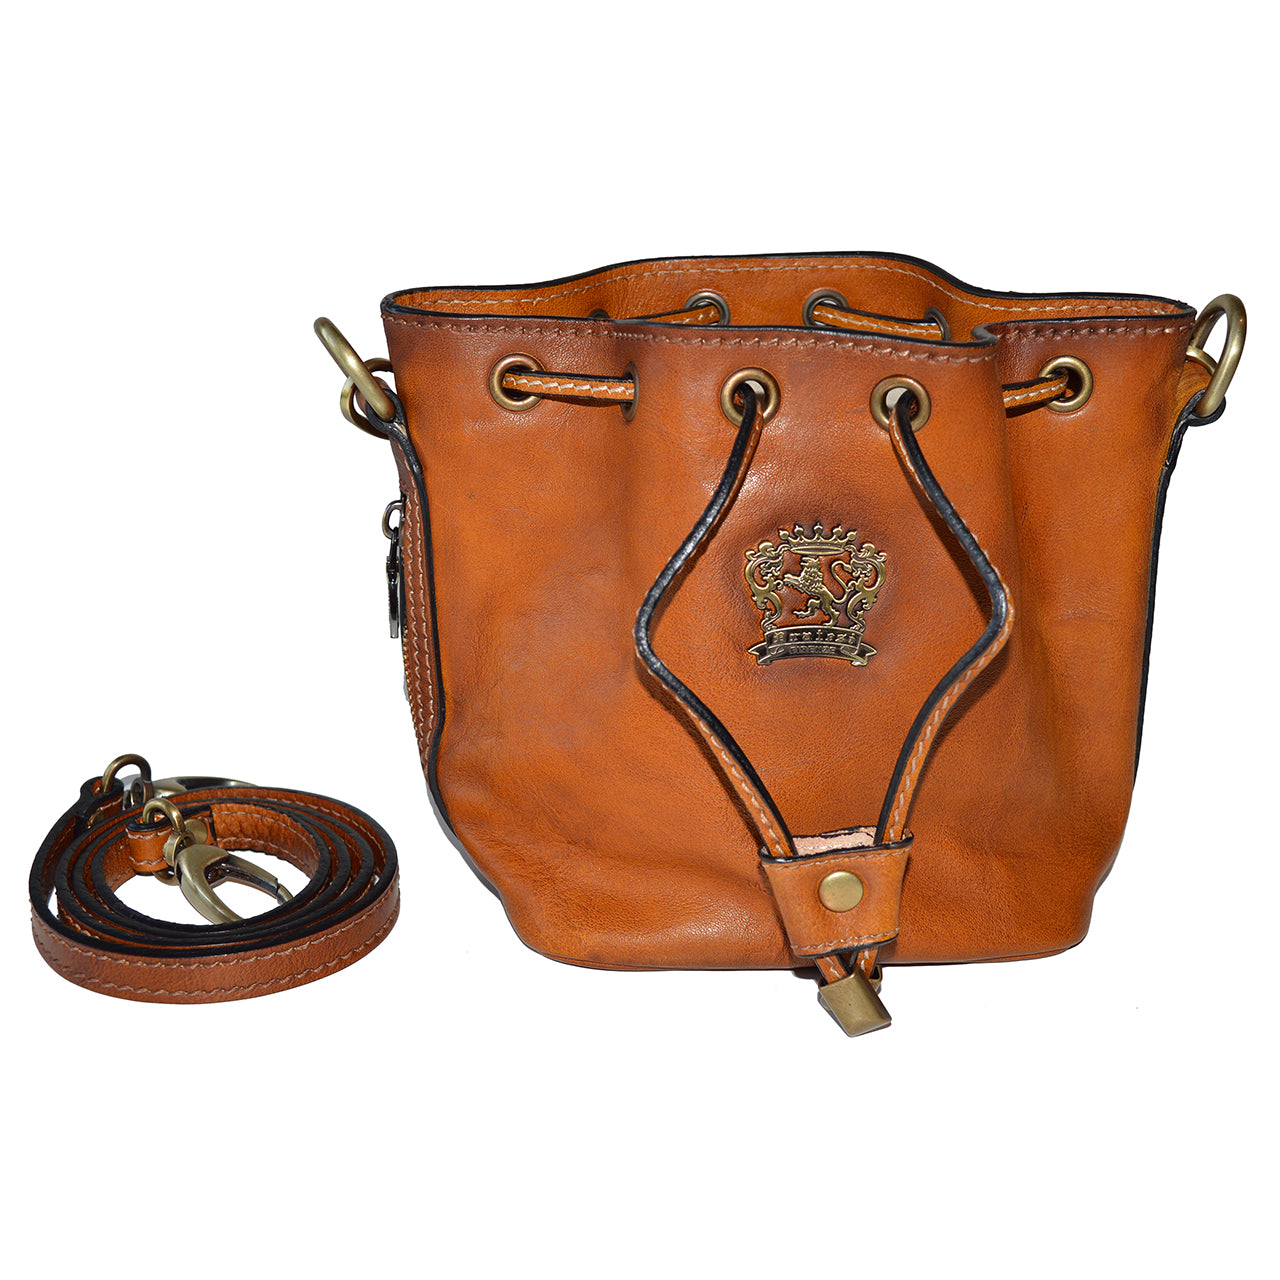 Pratesi Sorano Small Woman Bag in genuine Italian leather - Sorano Black